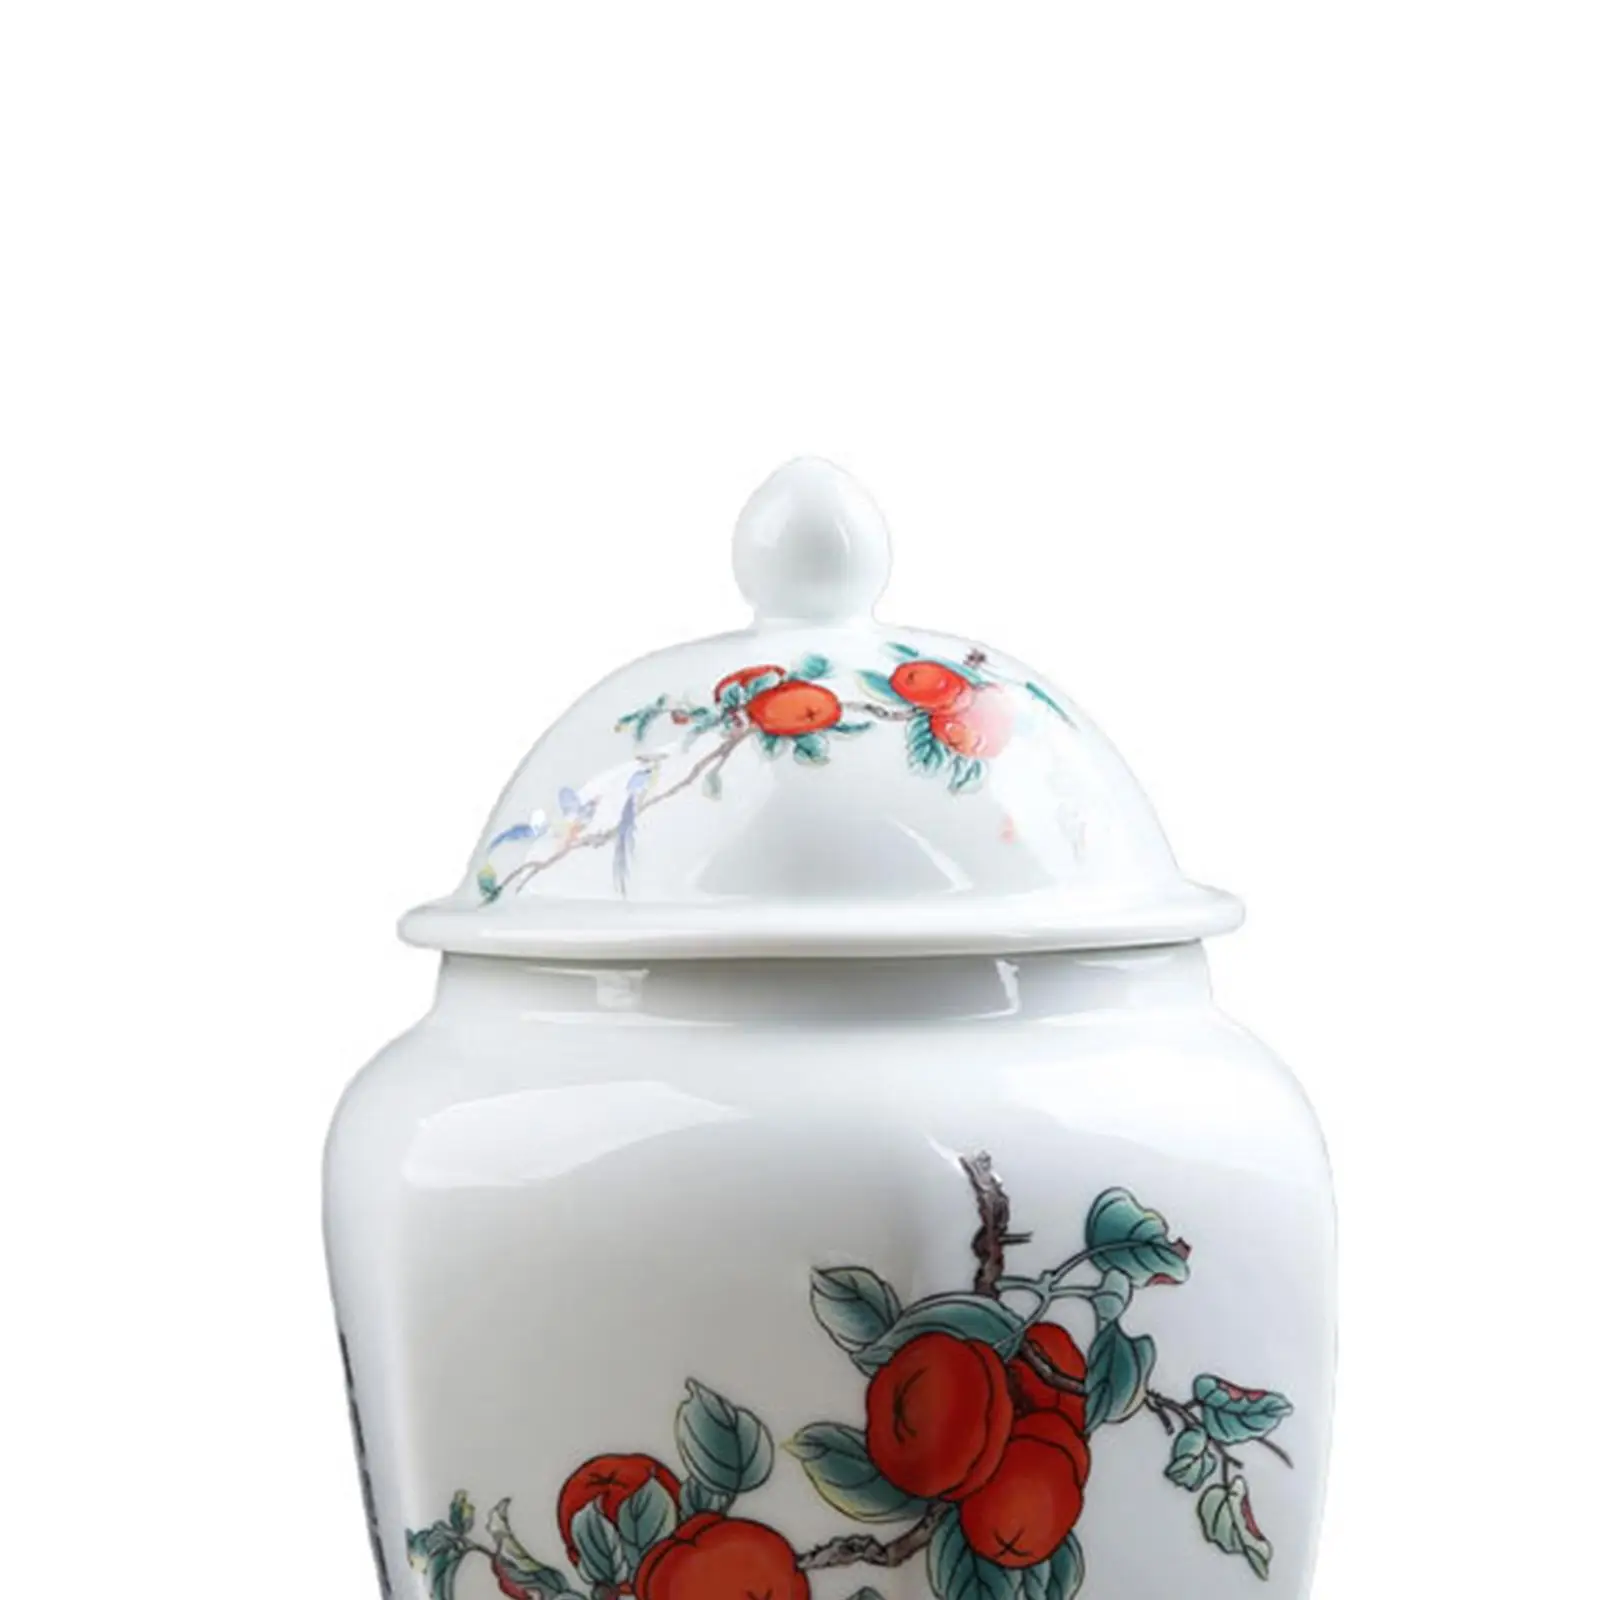 Chinese Style Porcelain Ginger Jar Tea Storage Jar Hand Painted Glazed Decorative Flower Vase Table Centerpiece Home Decoration